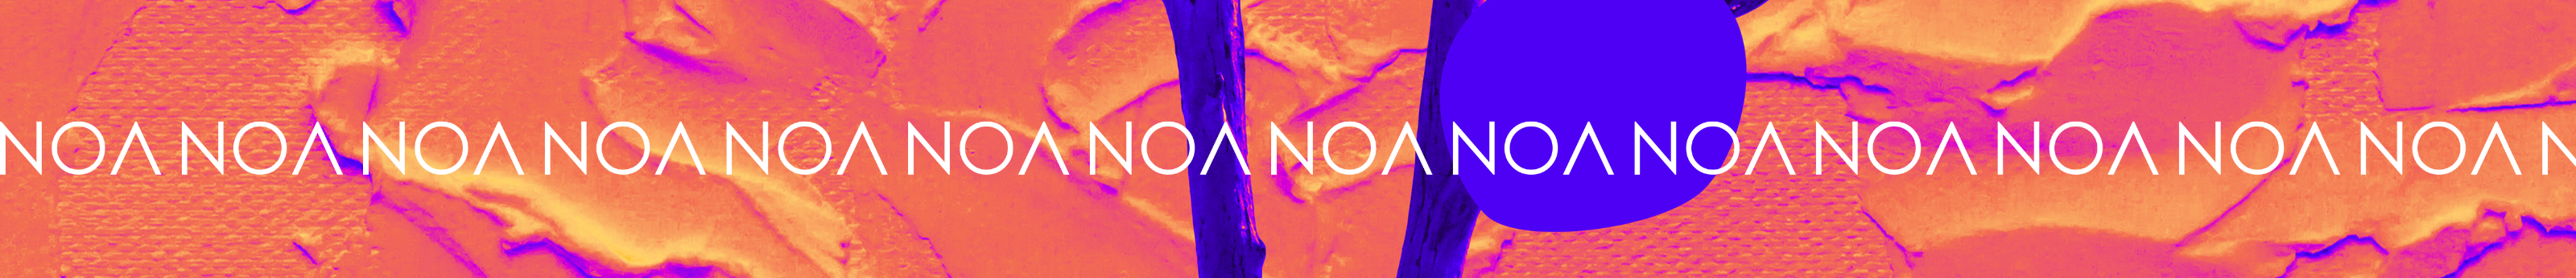 NOA Designworks's profile banner